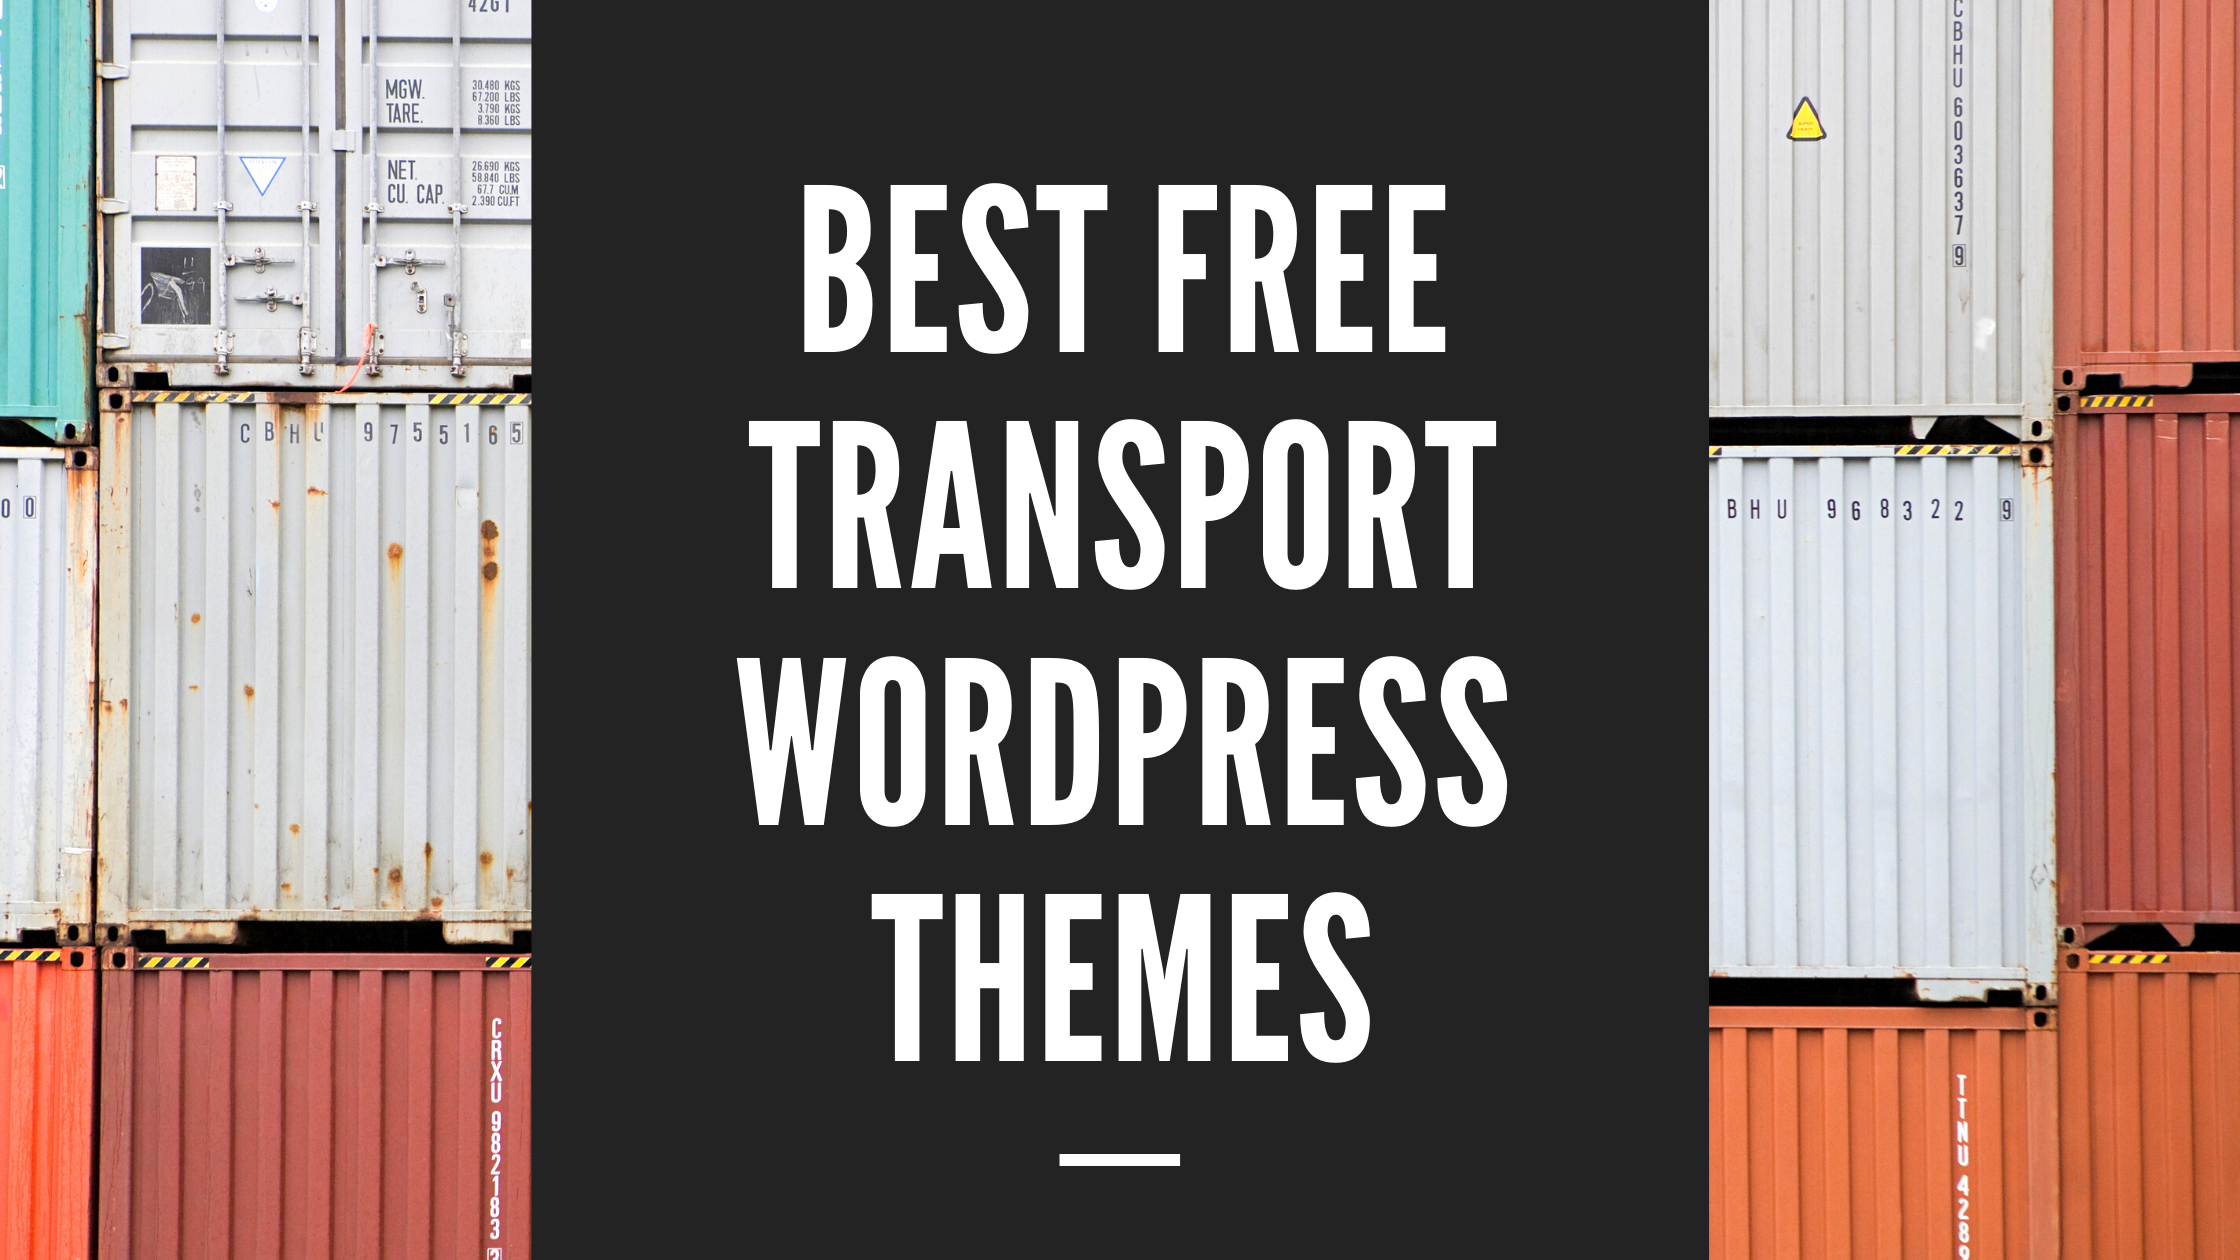 Best Free Transport WordPress Themes- Themes Caliber post thumbnail image